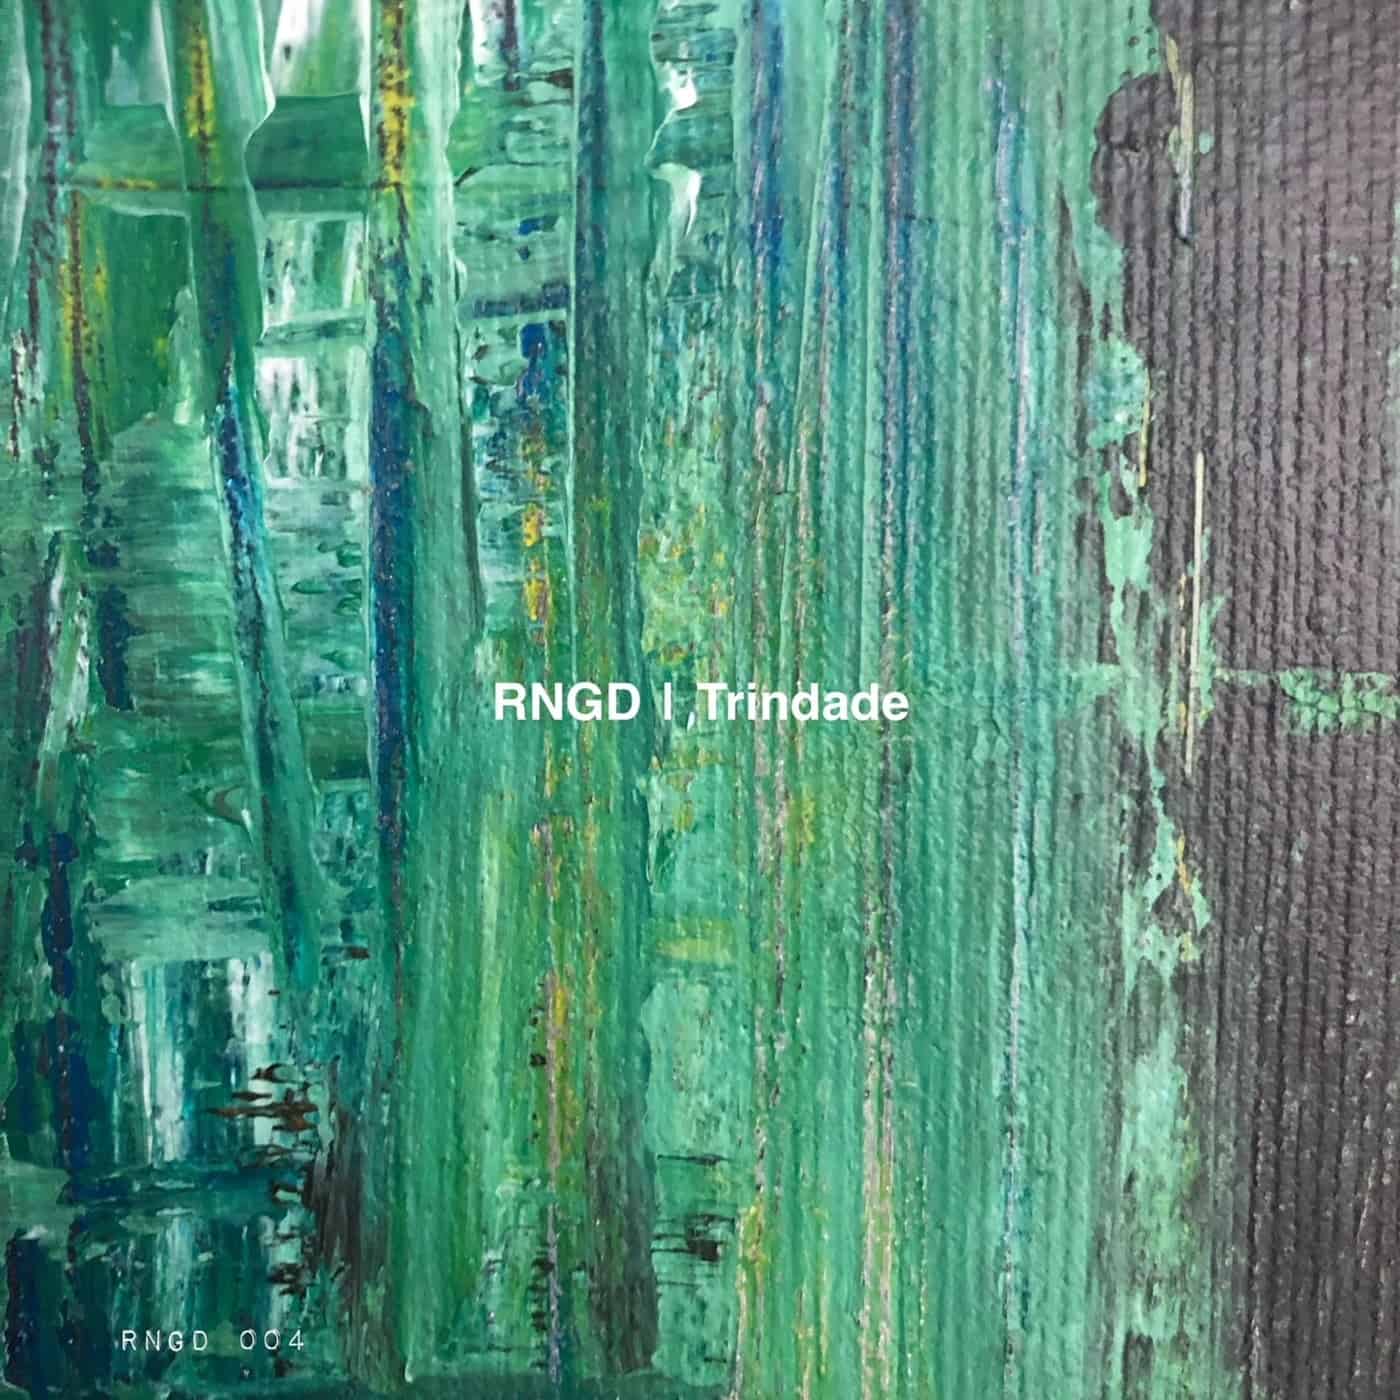 Download RNGD - Trindade on Electrobuzz